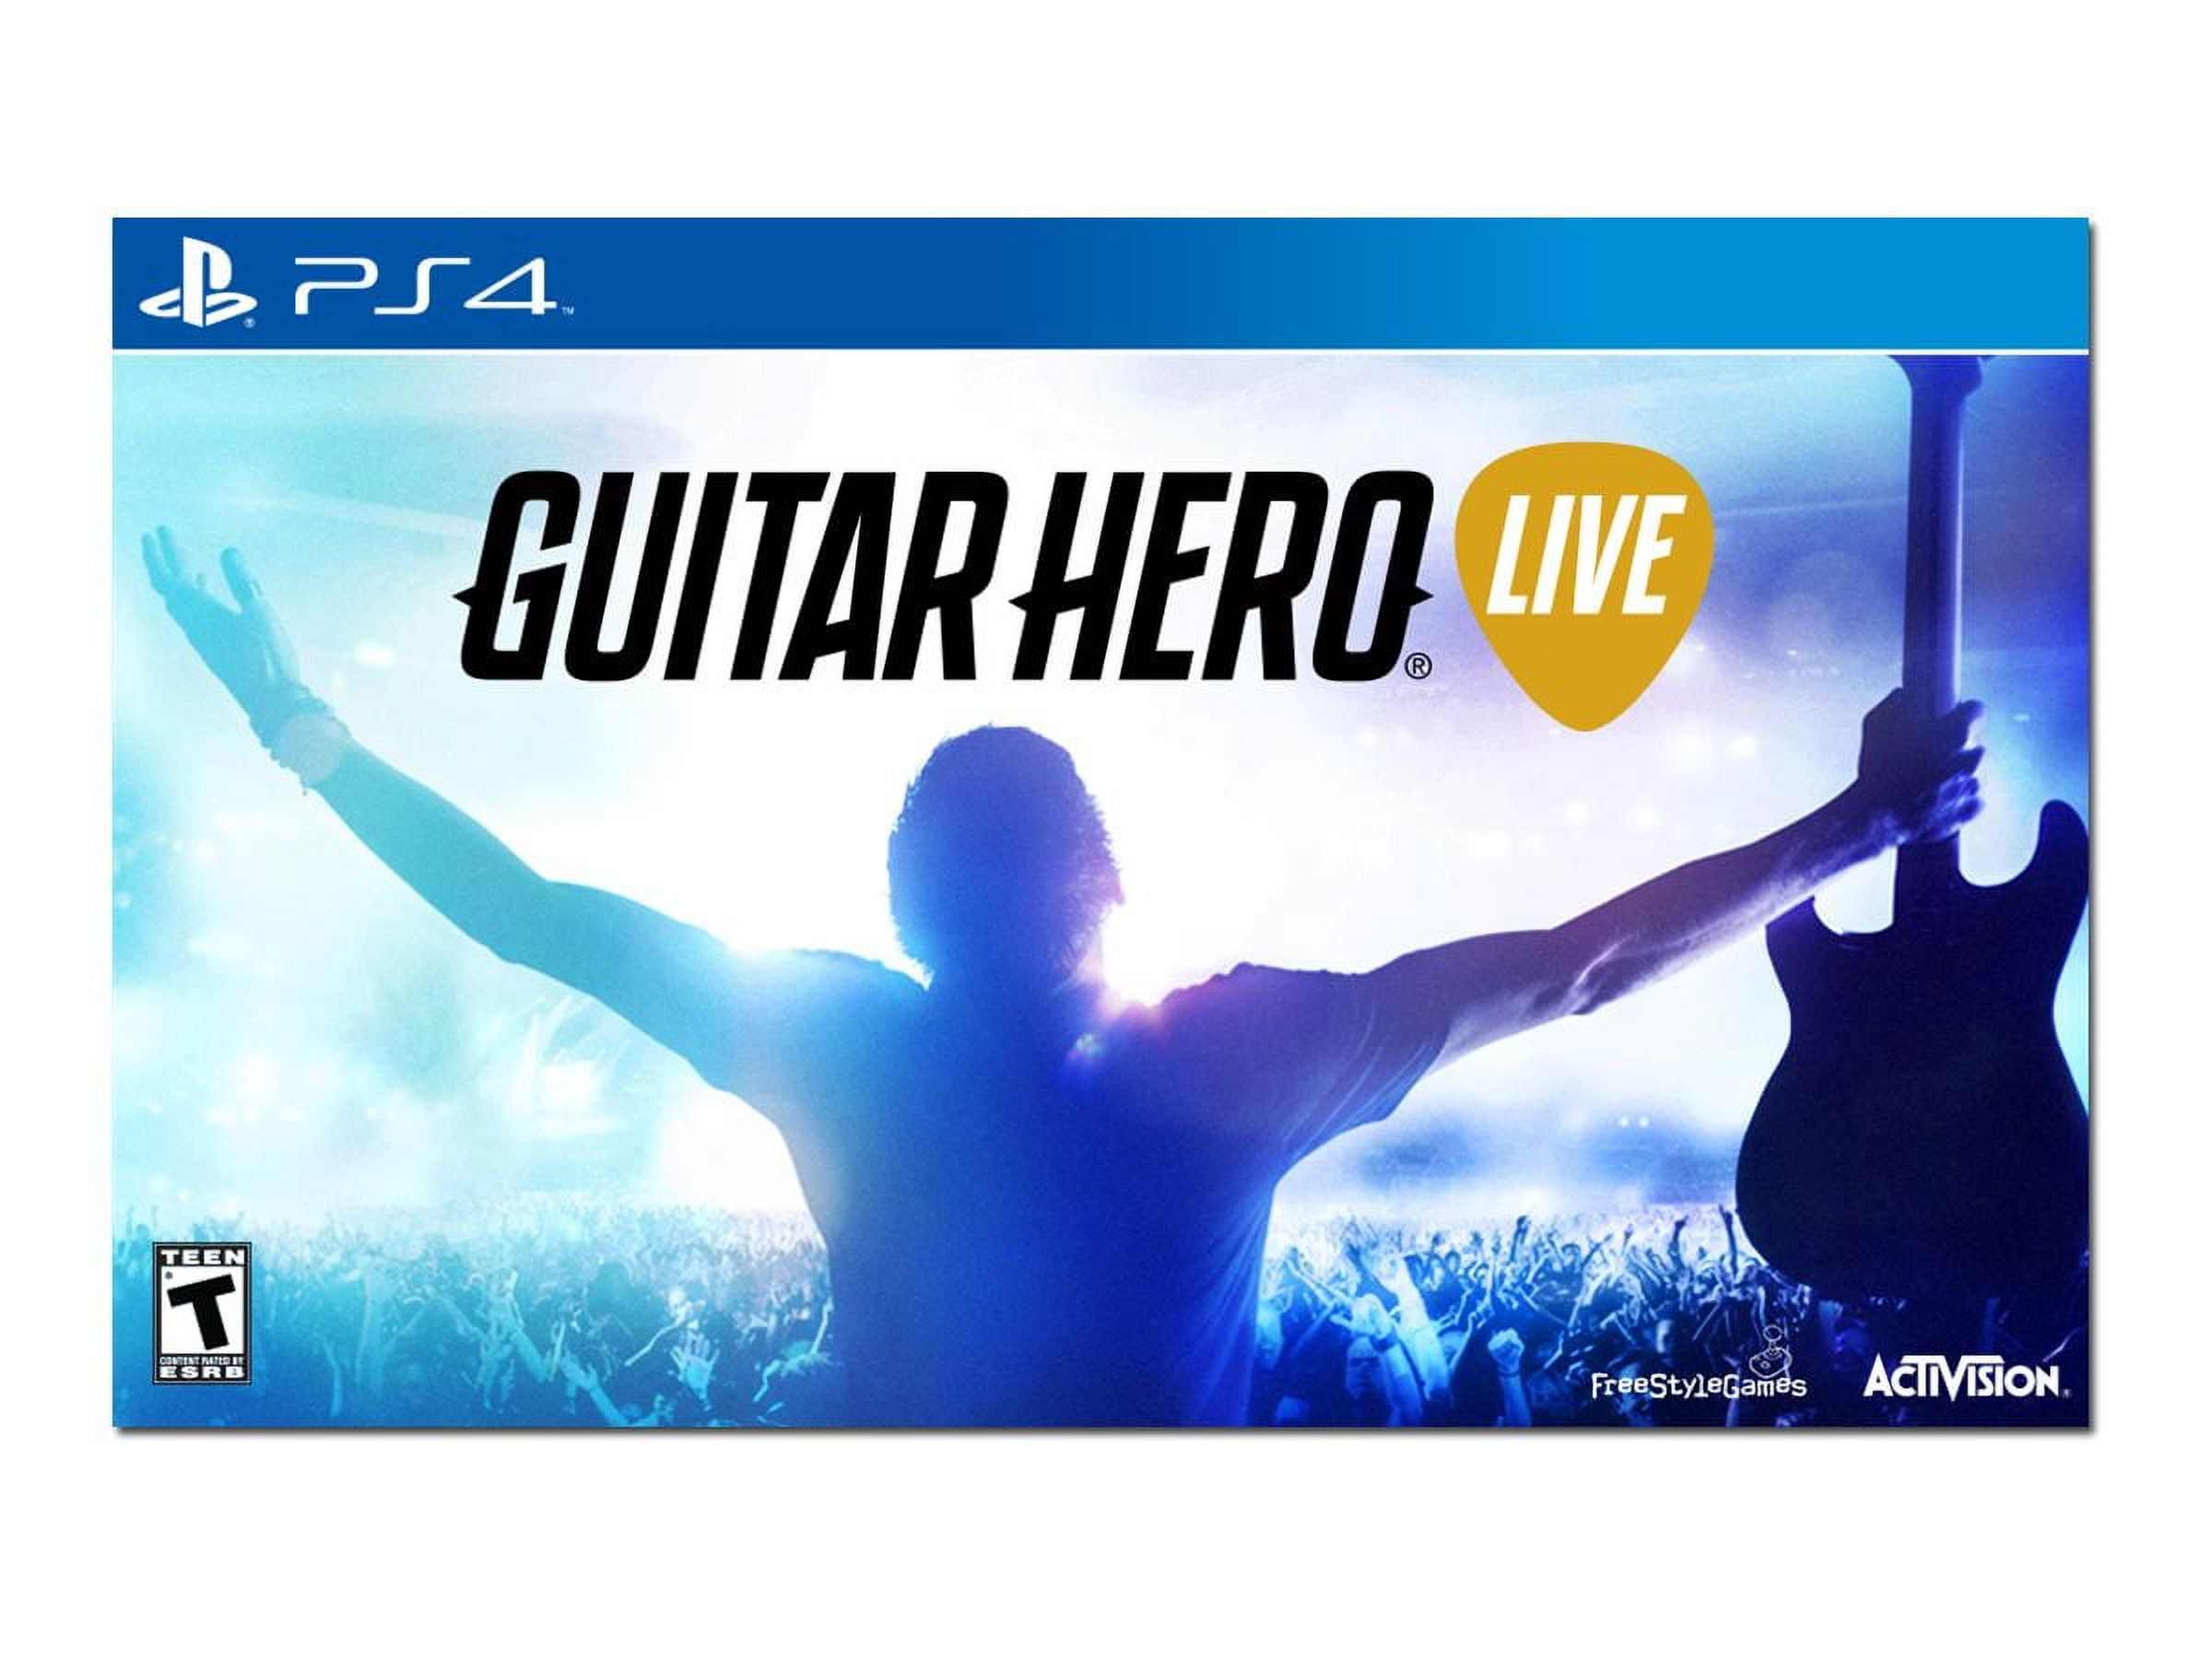 Will this wireless Guitar Hero Live work on PS5? : r/CloneHero